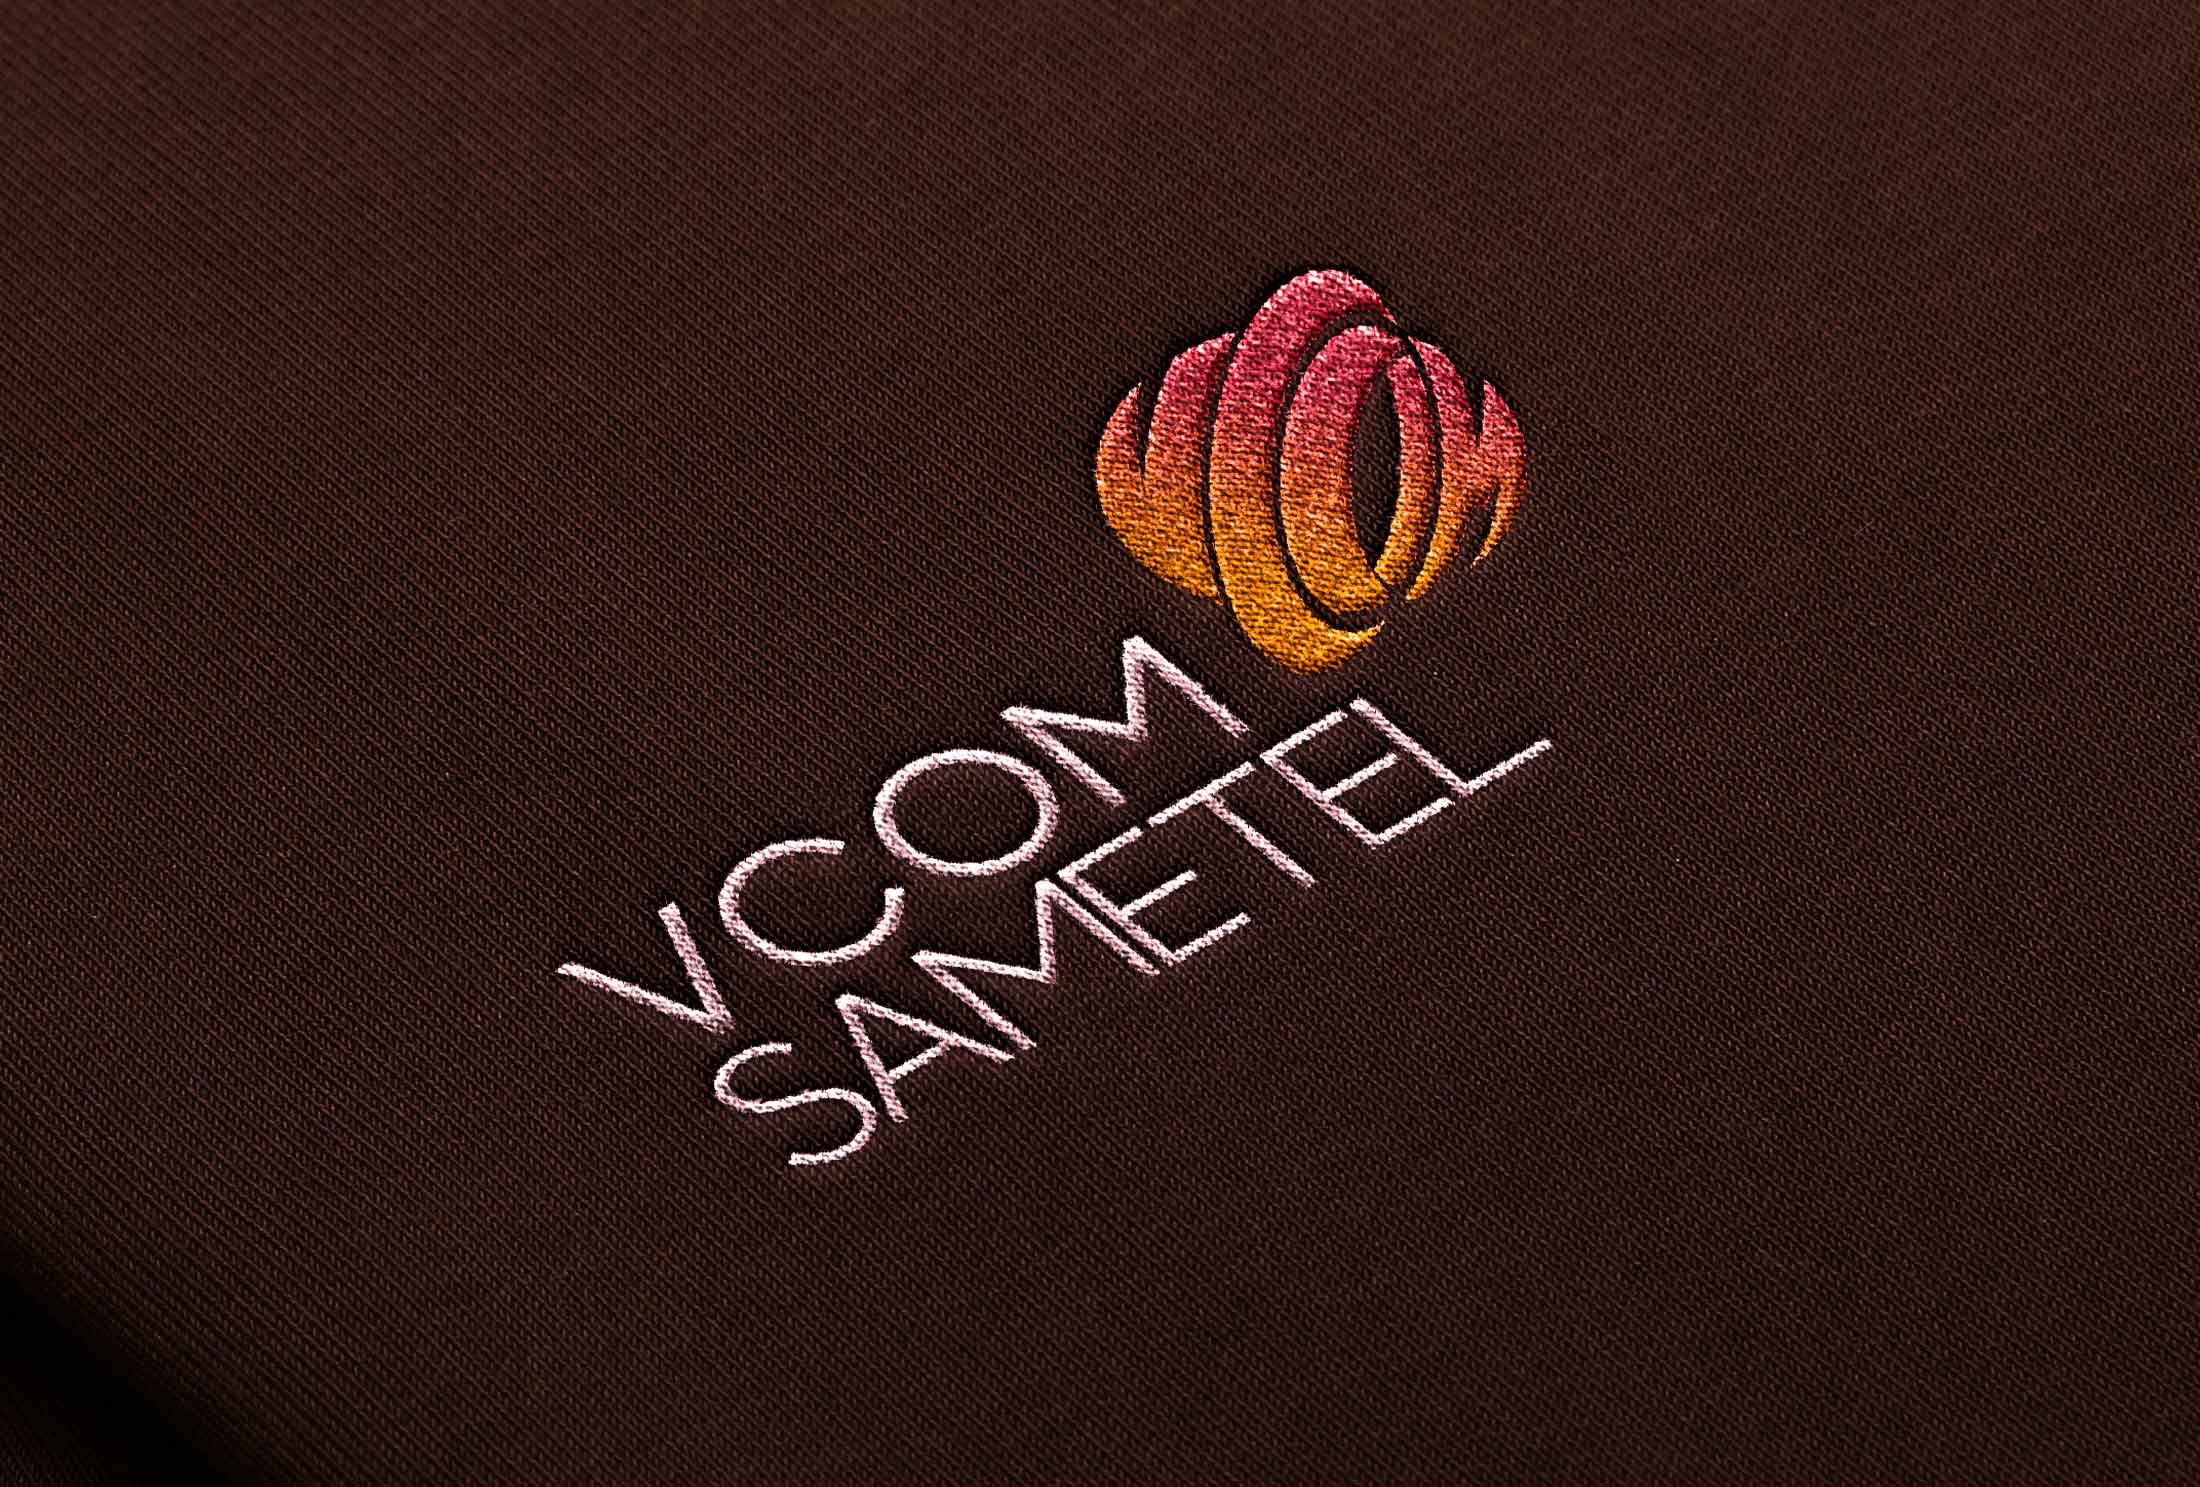 VCOM Sametel